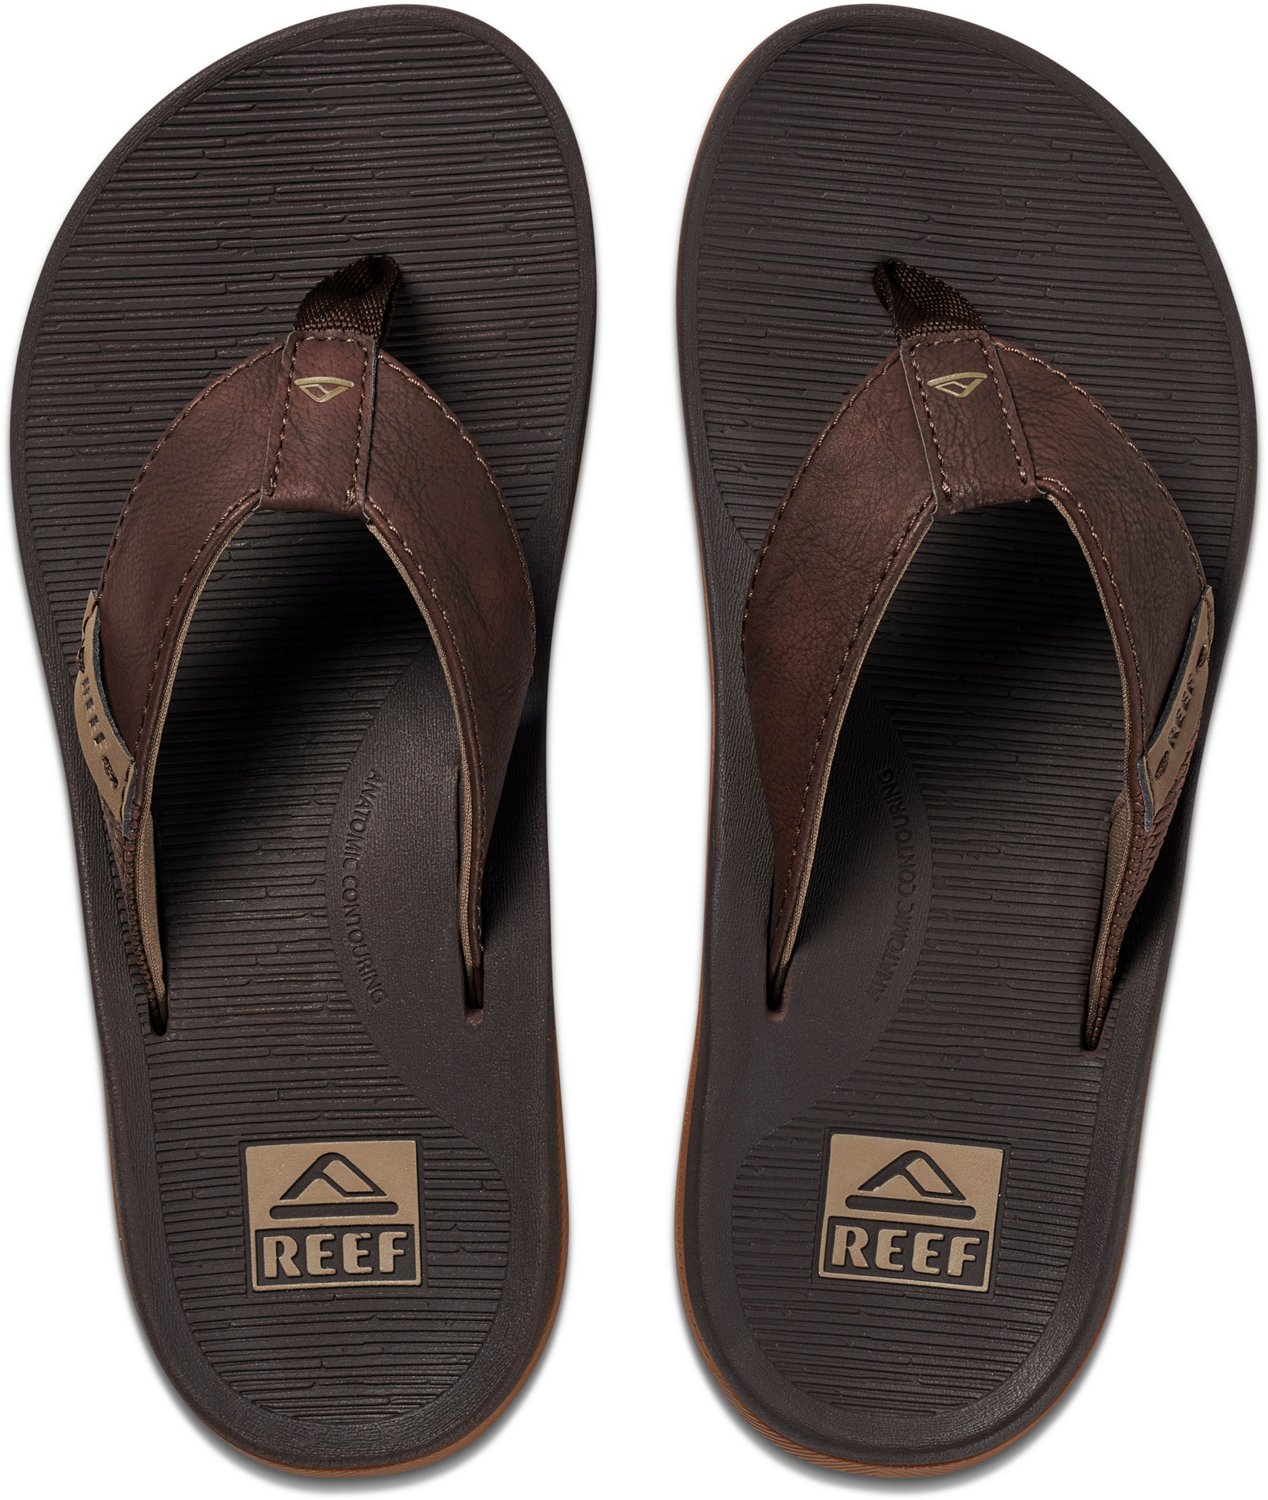 Reef Men's Santa Anna Sandals | Free Shipping at Academy